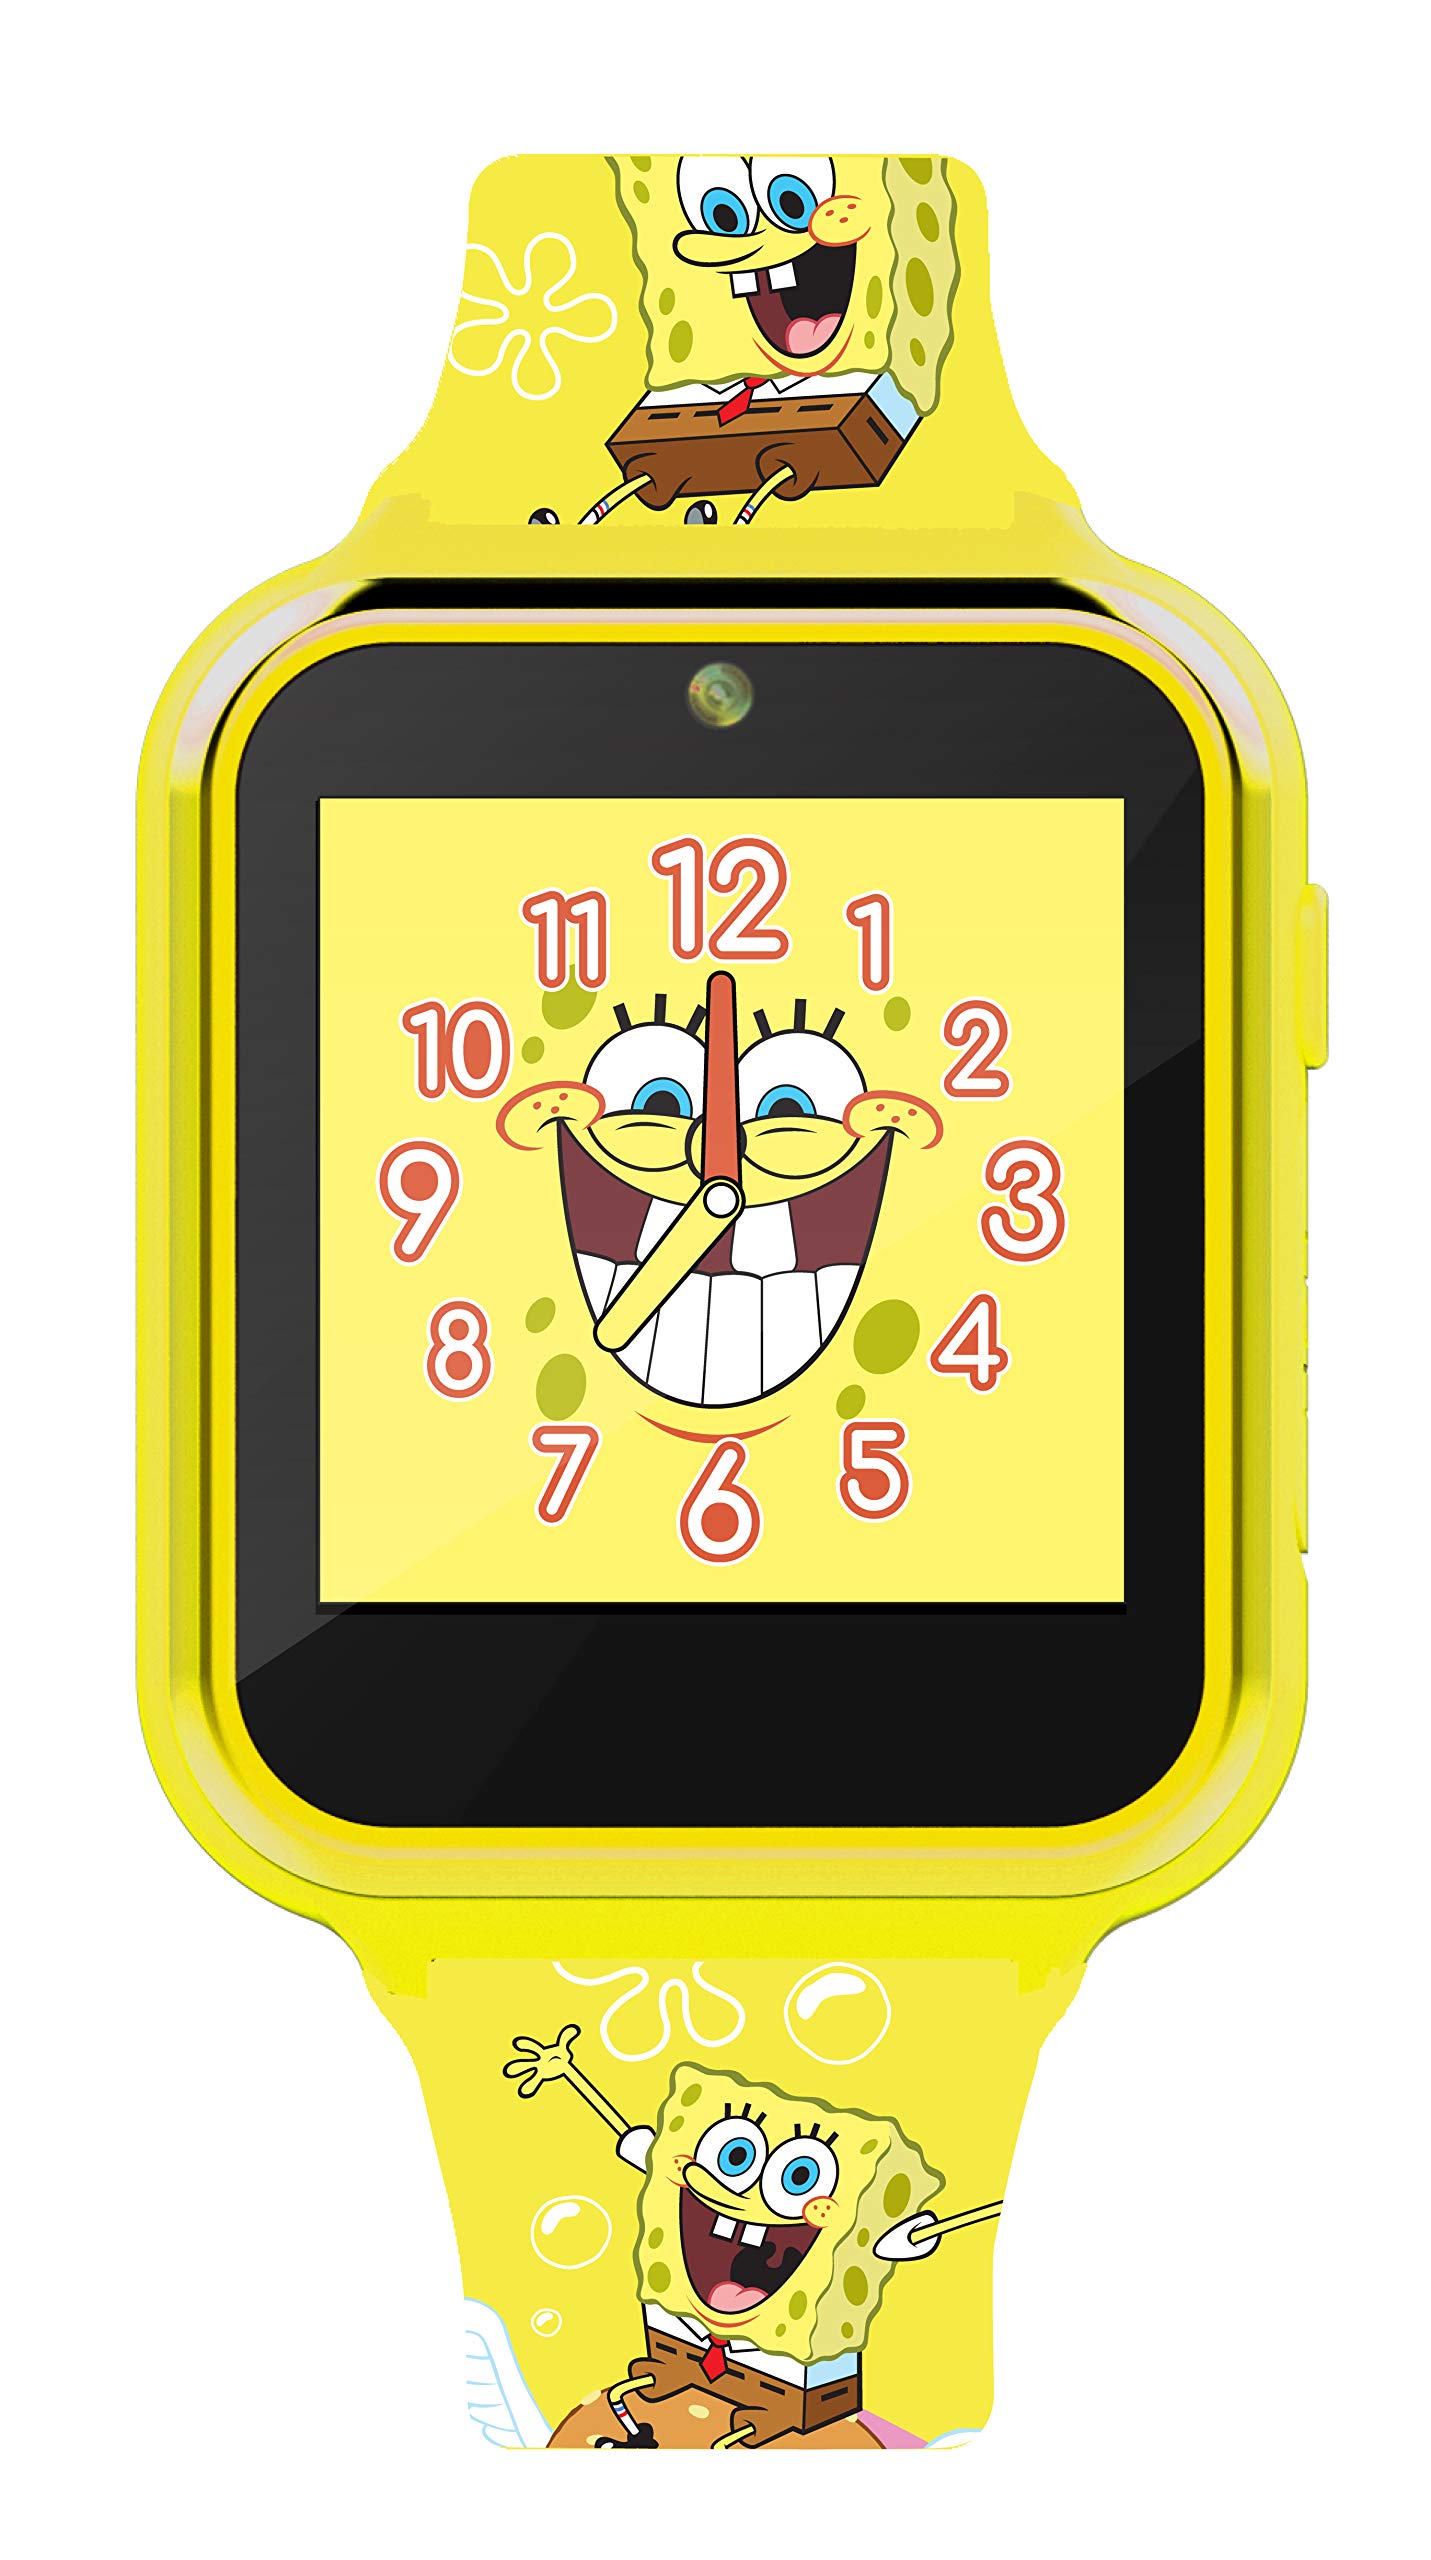 Accutime Kids Nickelodeon Spongebob Squarepants Yellow Educational Learning Touchscreen Smart Watch Toy for Boys, Girls, Toddlers - Selfie Cam, Games, Alarm, Calculator (Model: SGB4090AZ)